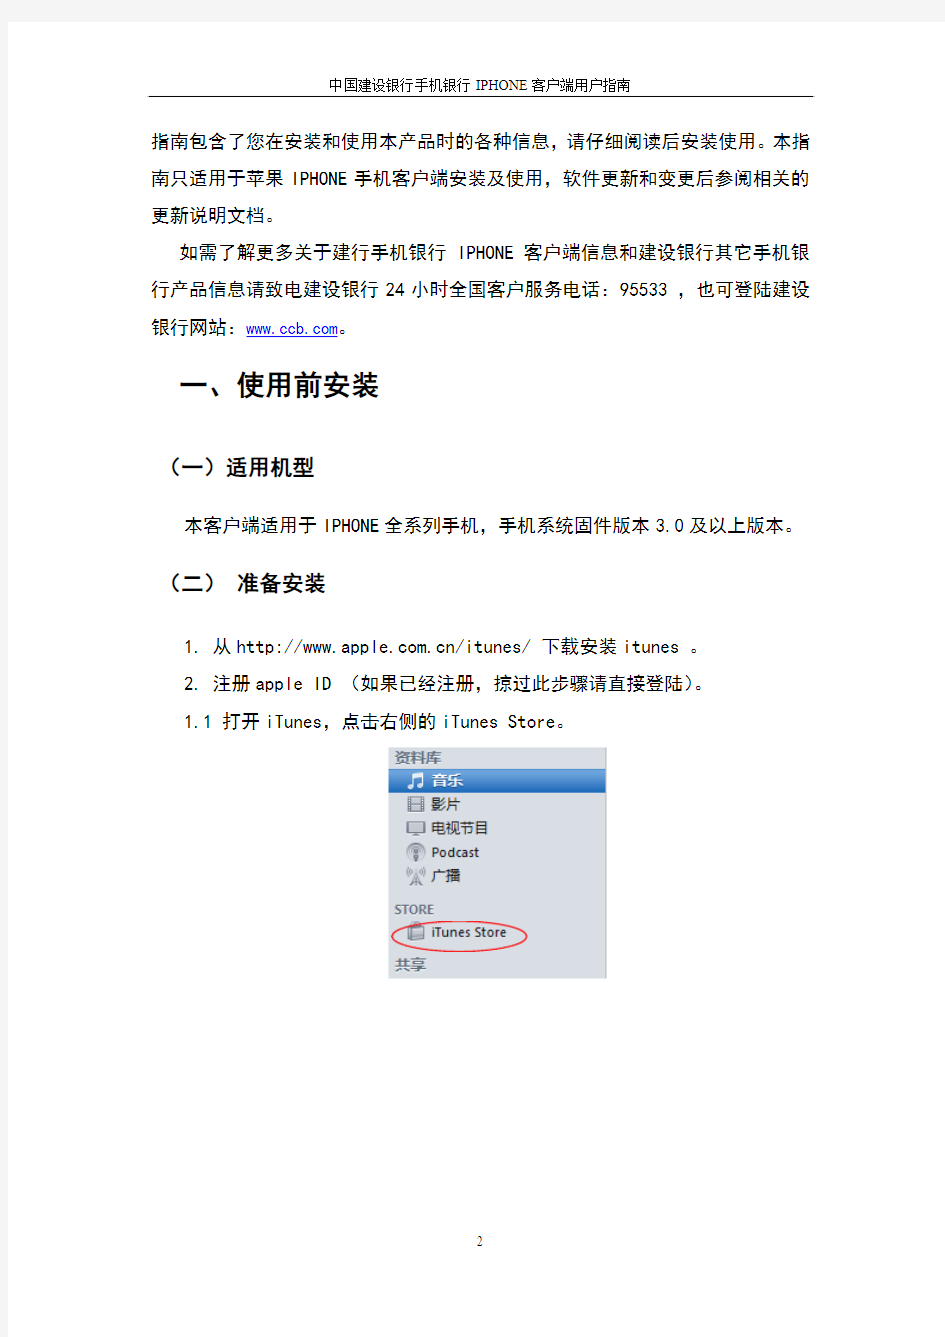 [DOC] 中国建设银行手机银行iPhone客户端使用指南